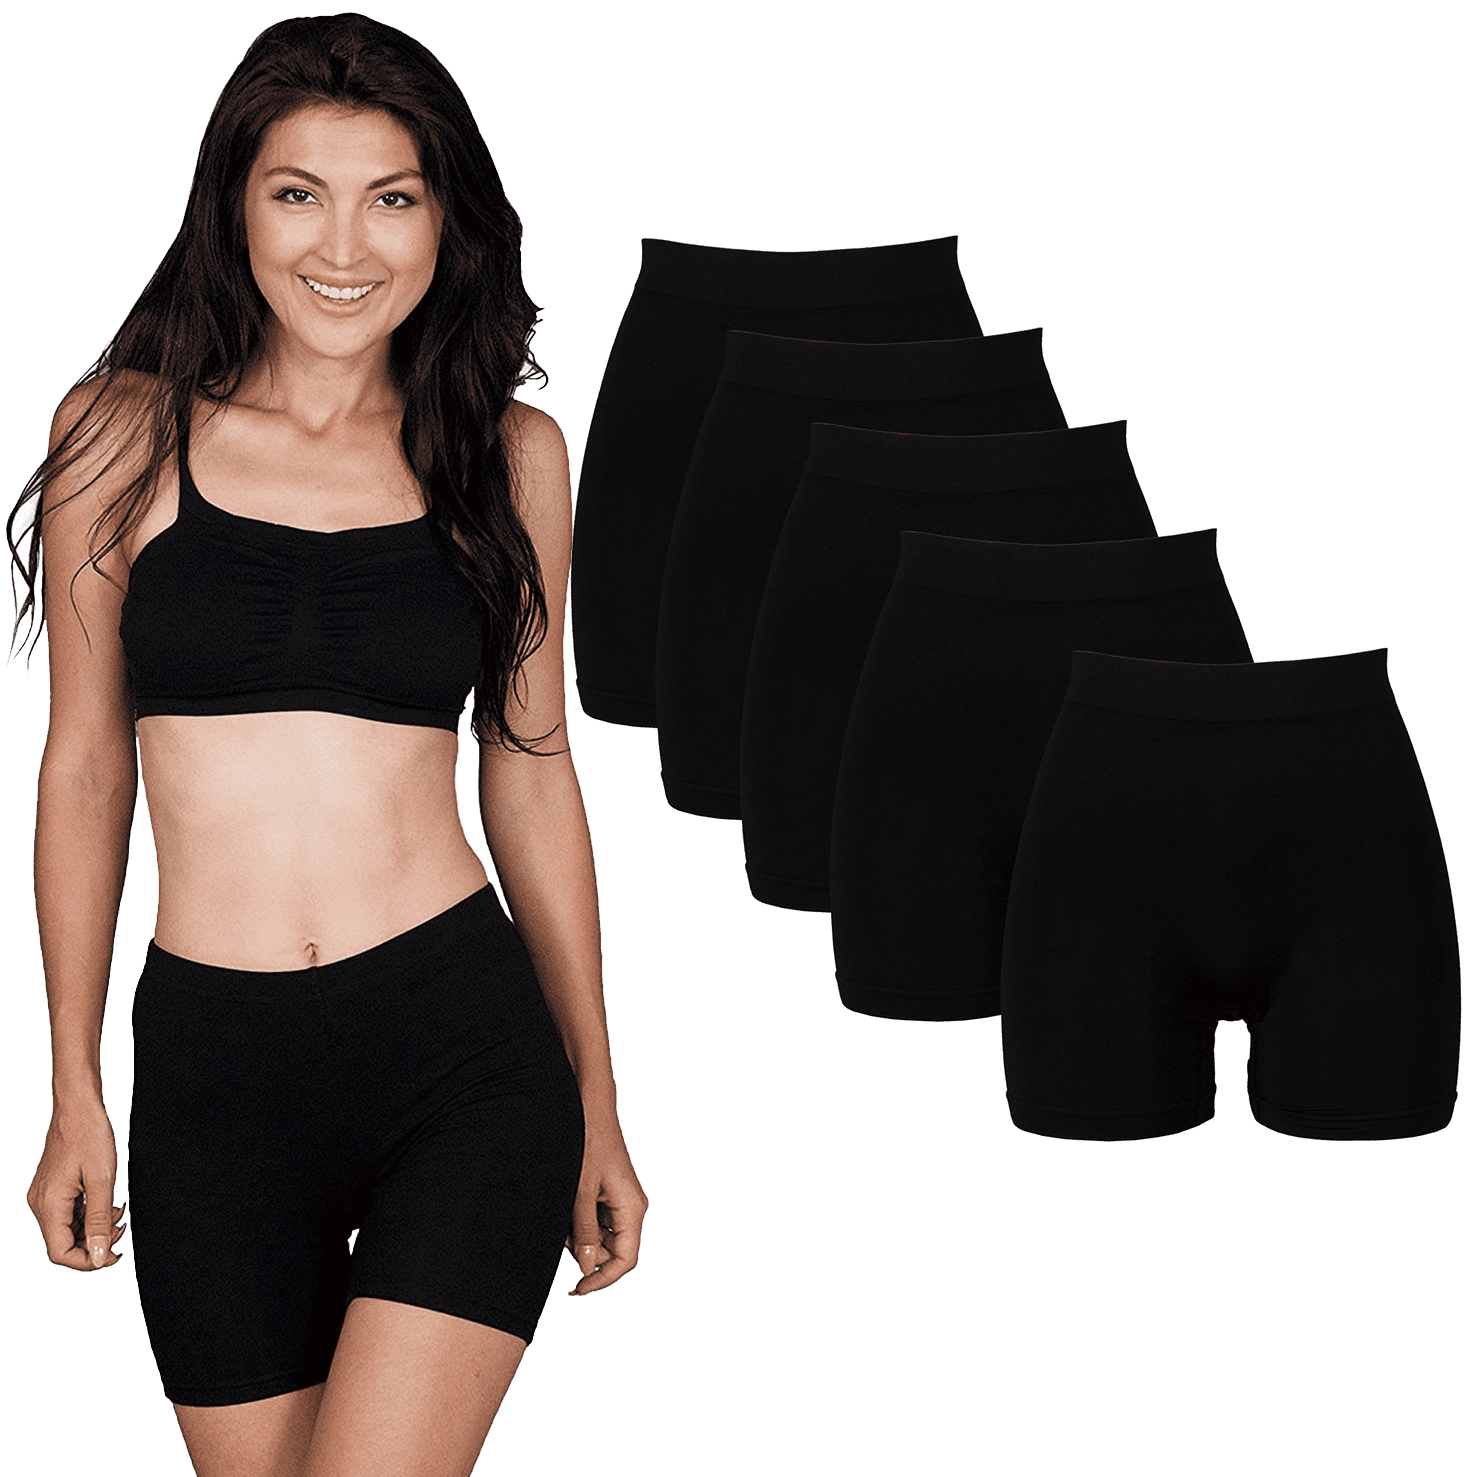 Emprella 5 Pack Slip Shorts for Under Dresses, Women's Seamless